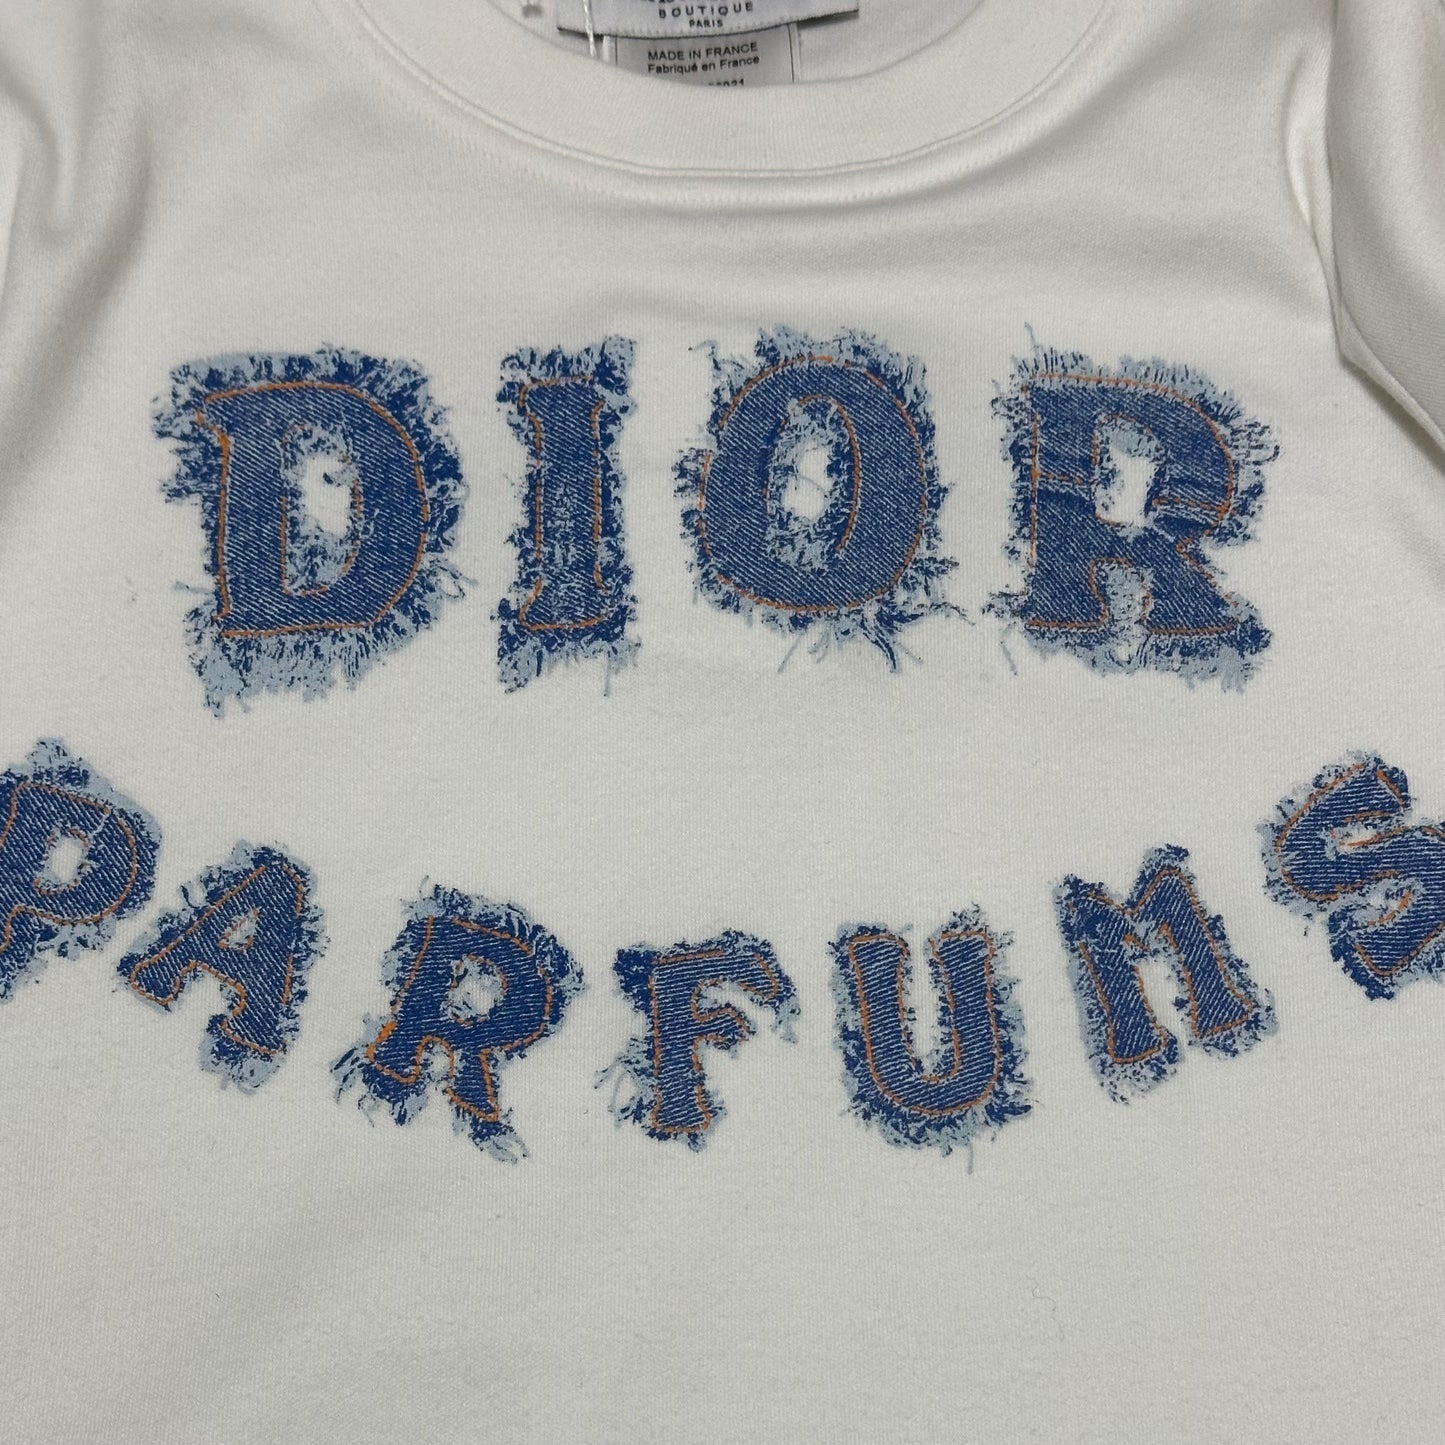 CHRISTIAN DIOR Spring Summer 2002 "DIOR PARFUMS" Denim Look Logo T-Shirt